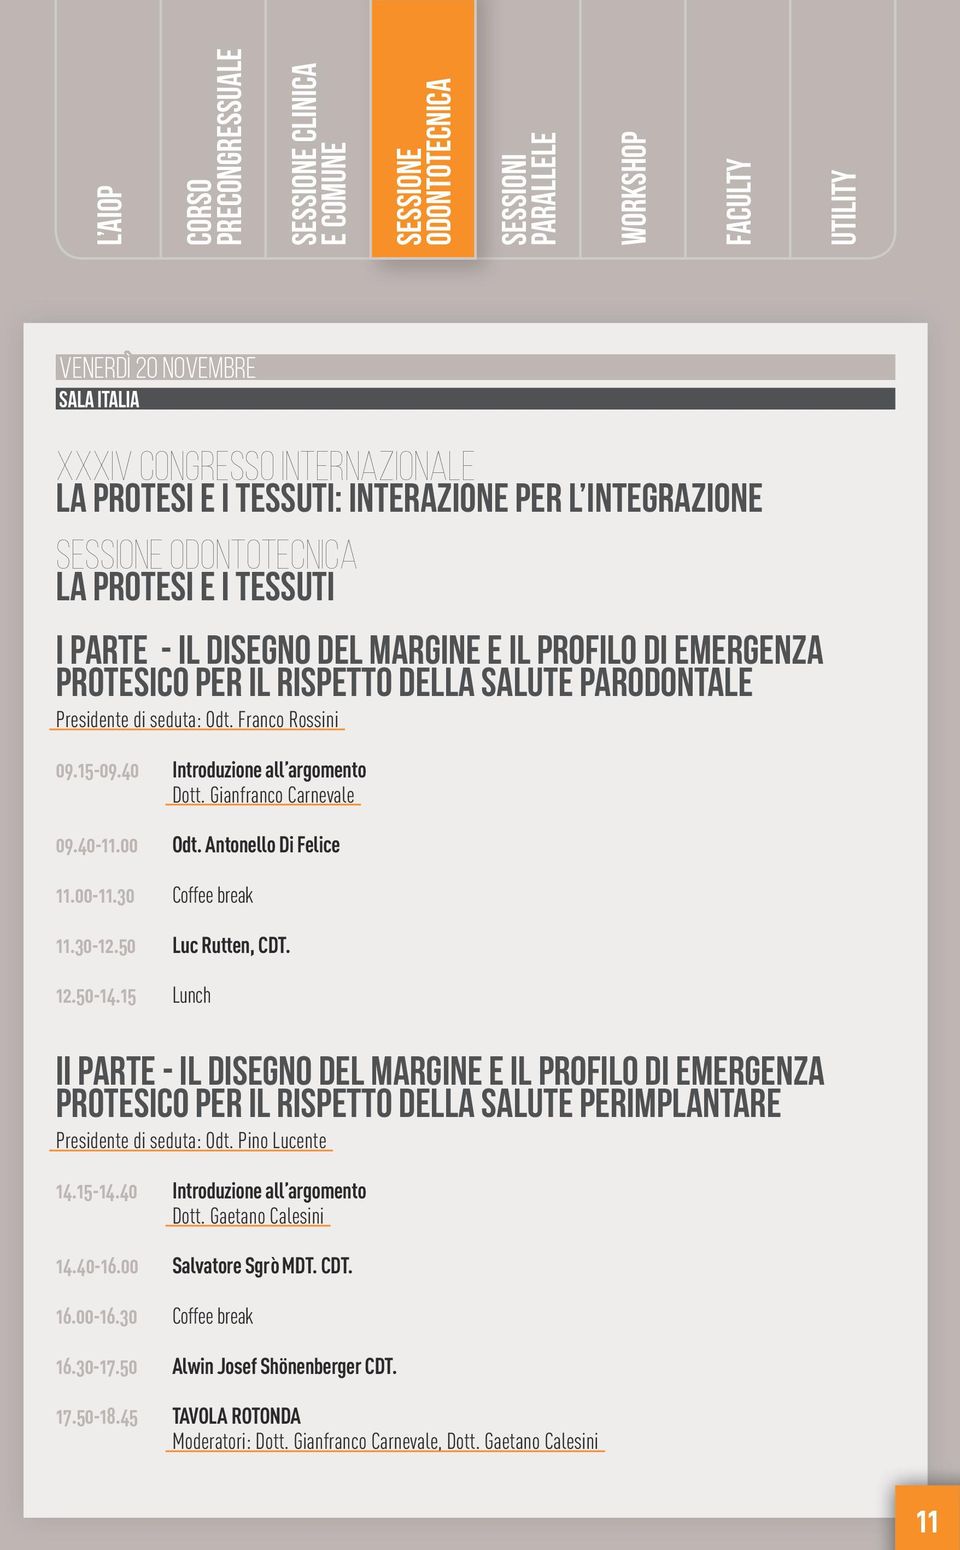 Gianfranco Carnevale 09.40-11.00 Odt. Antonello Di Felice 11.00-11.30 Coffee break 11.30-12.50 Luc Rutten, CDT. 12.50-14.